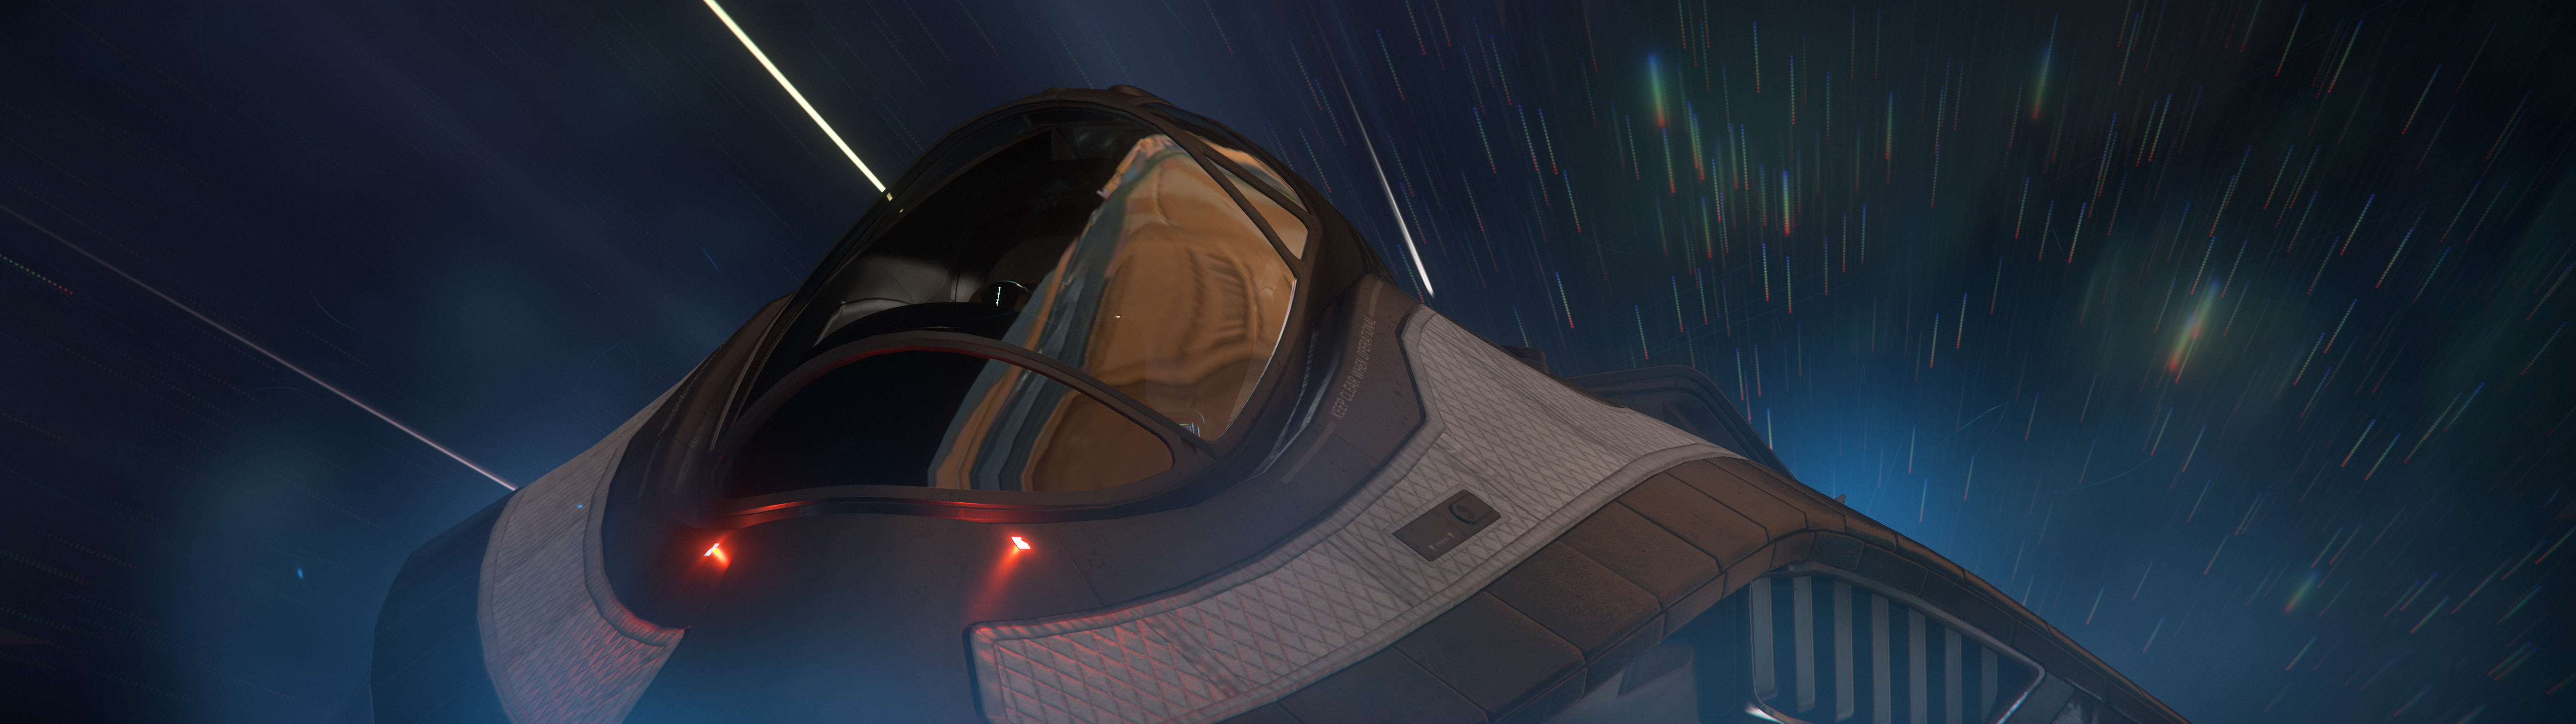 Star Citizen Spaceship Avenger Titan Ultrawide Screen Shot Quantum Drive Aegis Dynamics Video Games 5120x1440